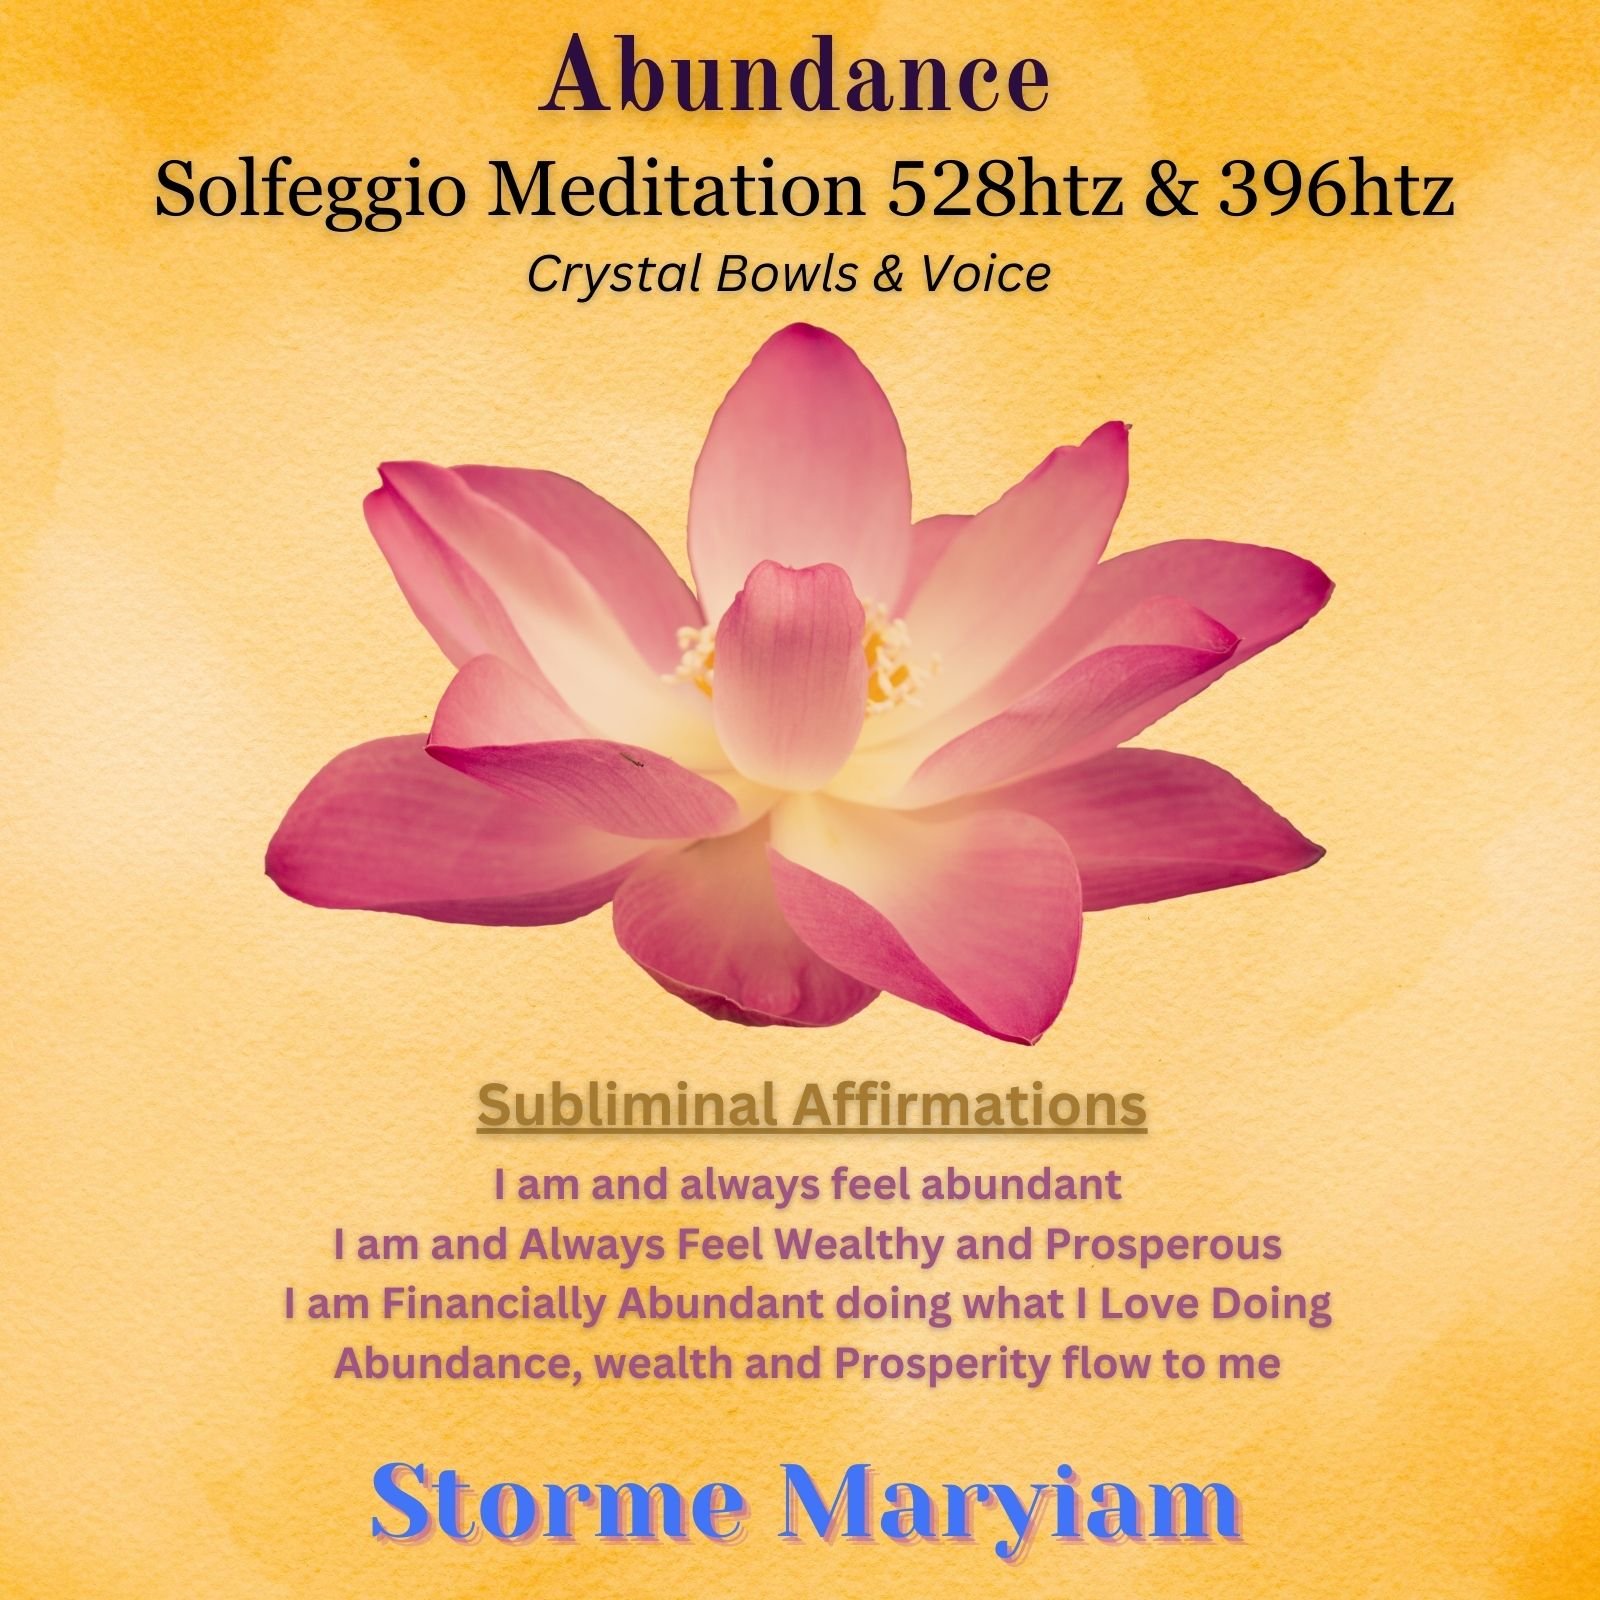 Solfeggio Meditation 528htz & 396htz Abundance